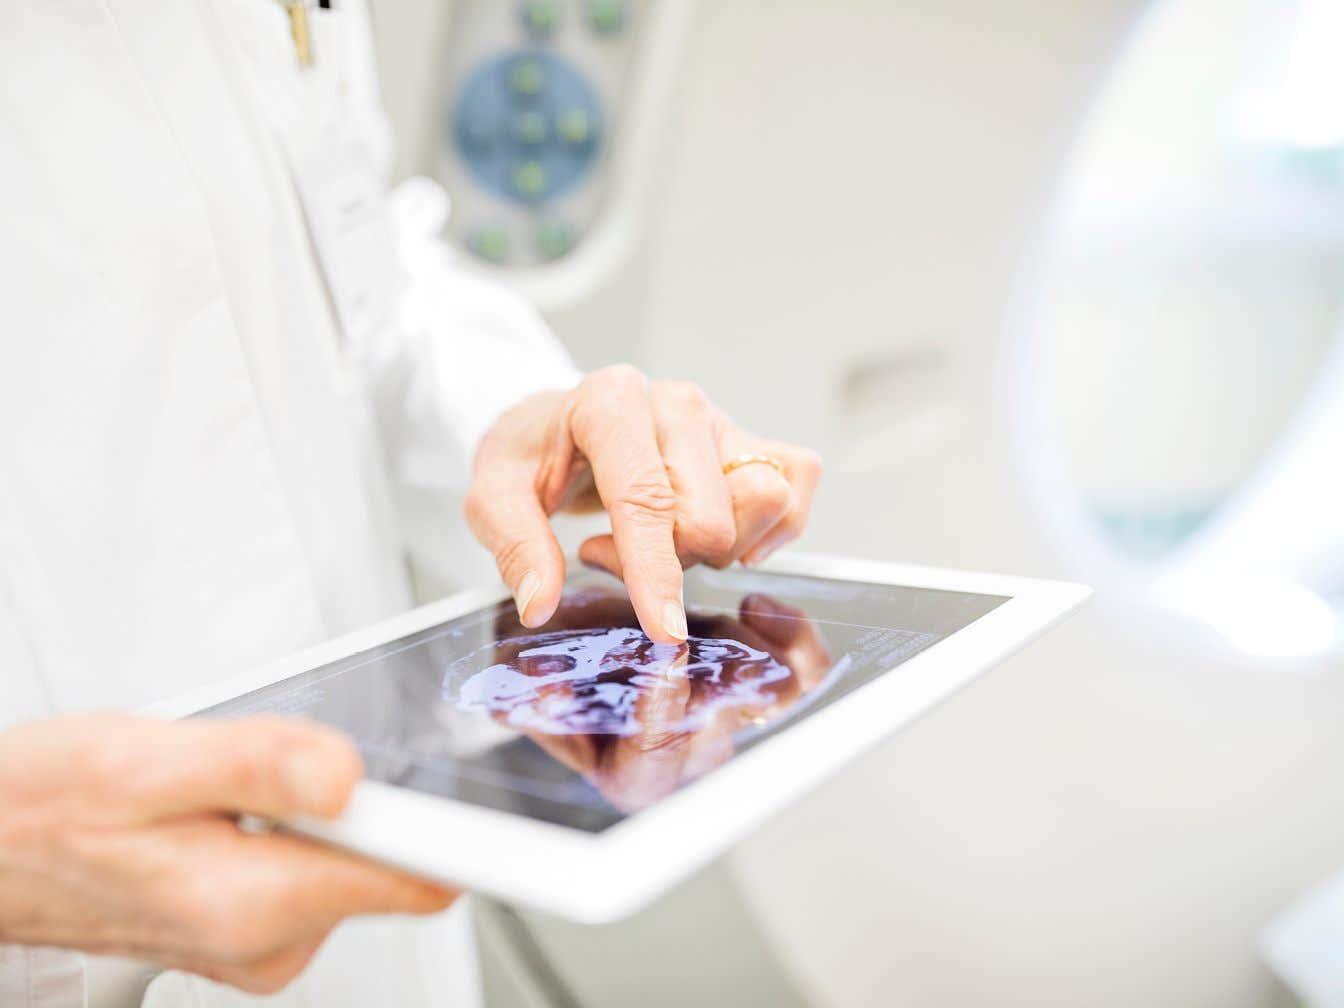 FDA Releases Foundational Digital Health Guidance